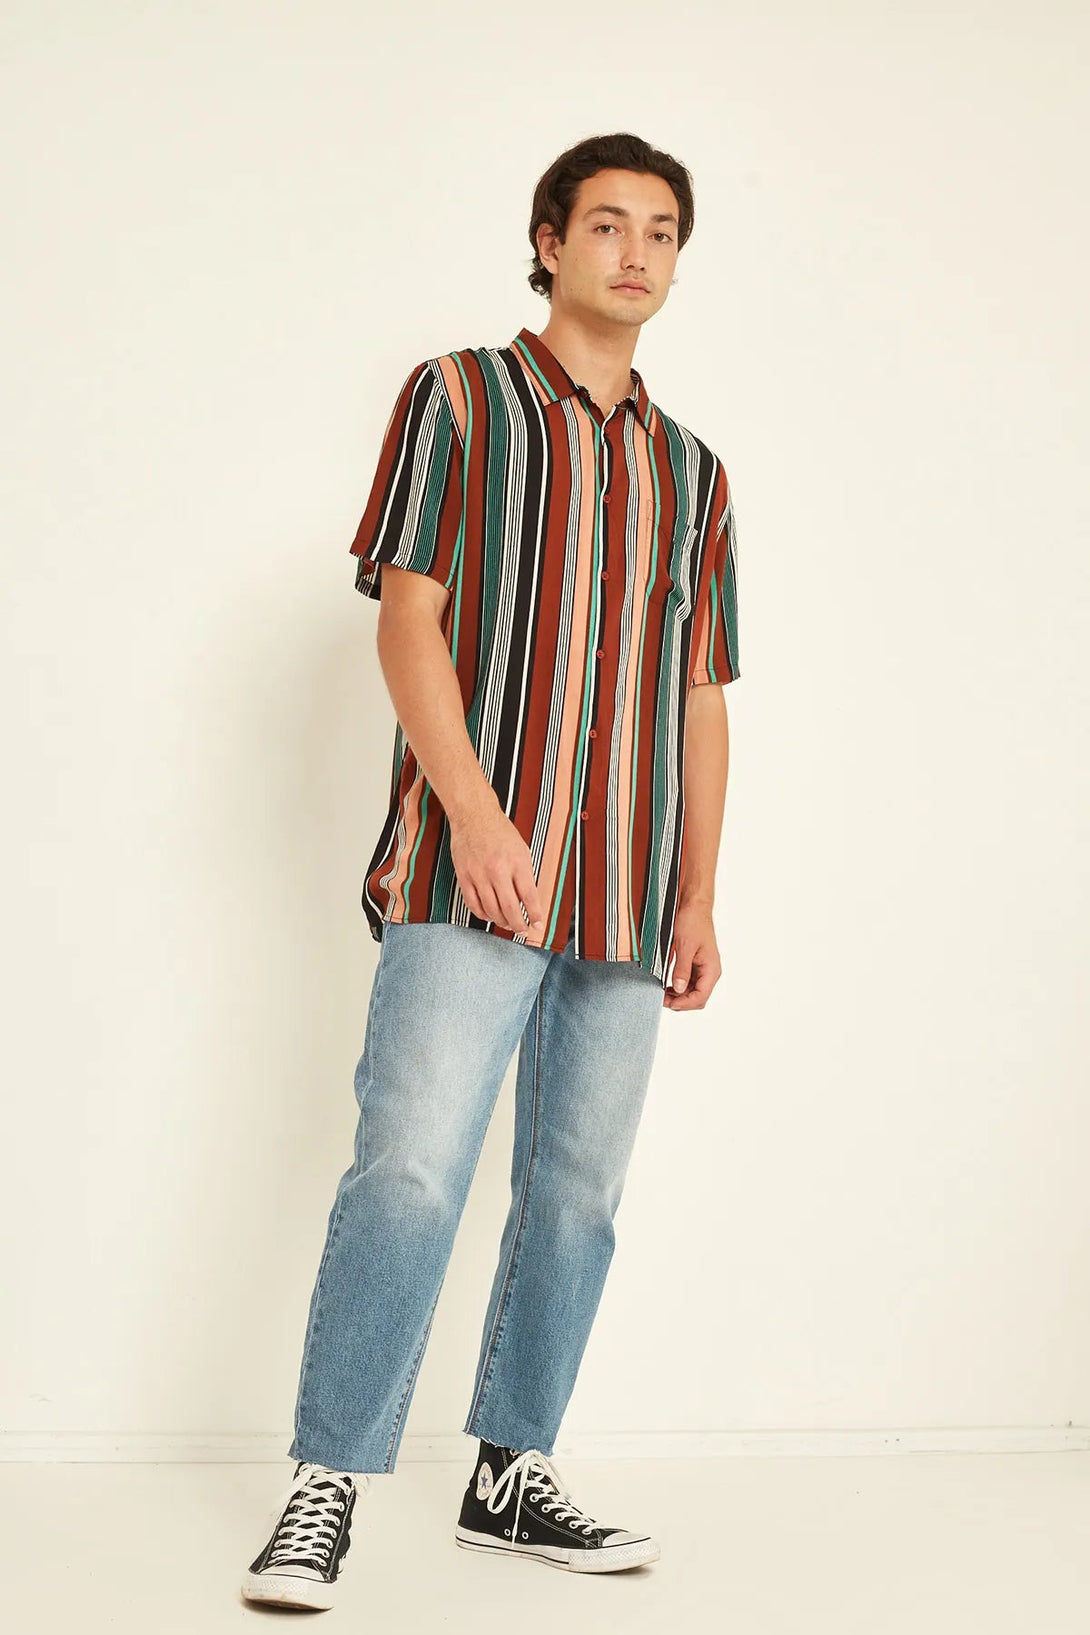 SHEIN Multi Color Lining Shirt - Negative Apparel